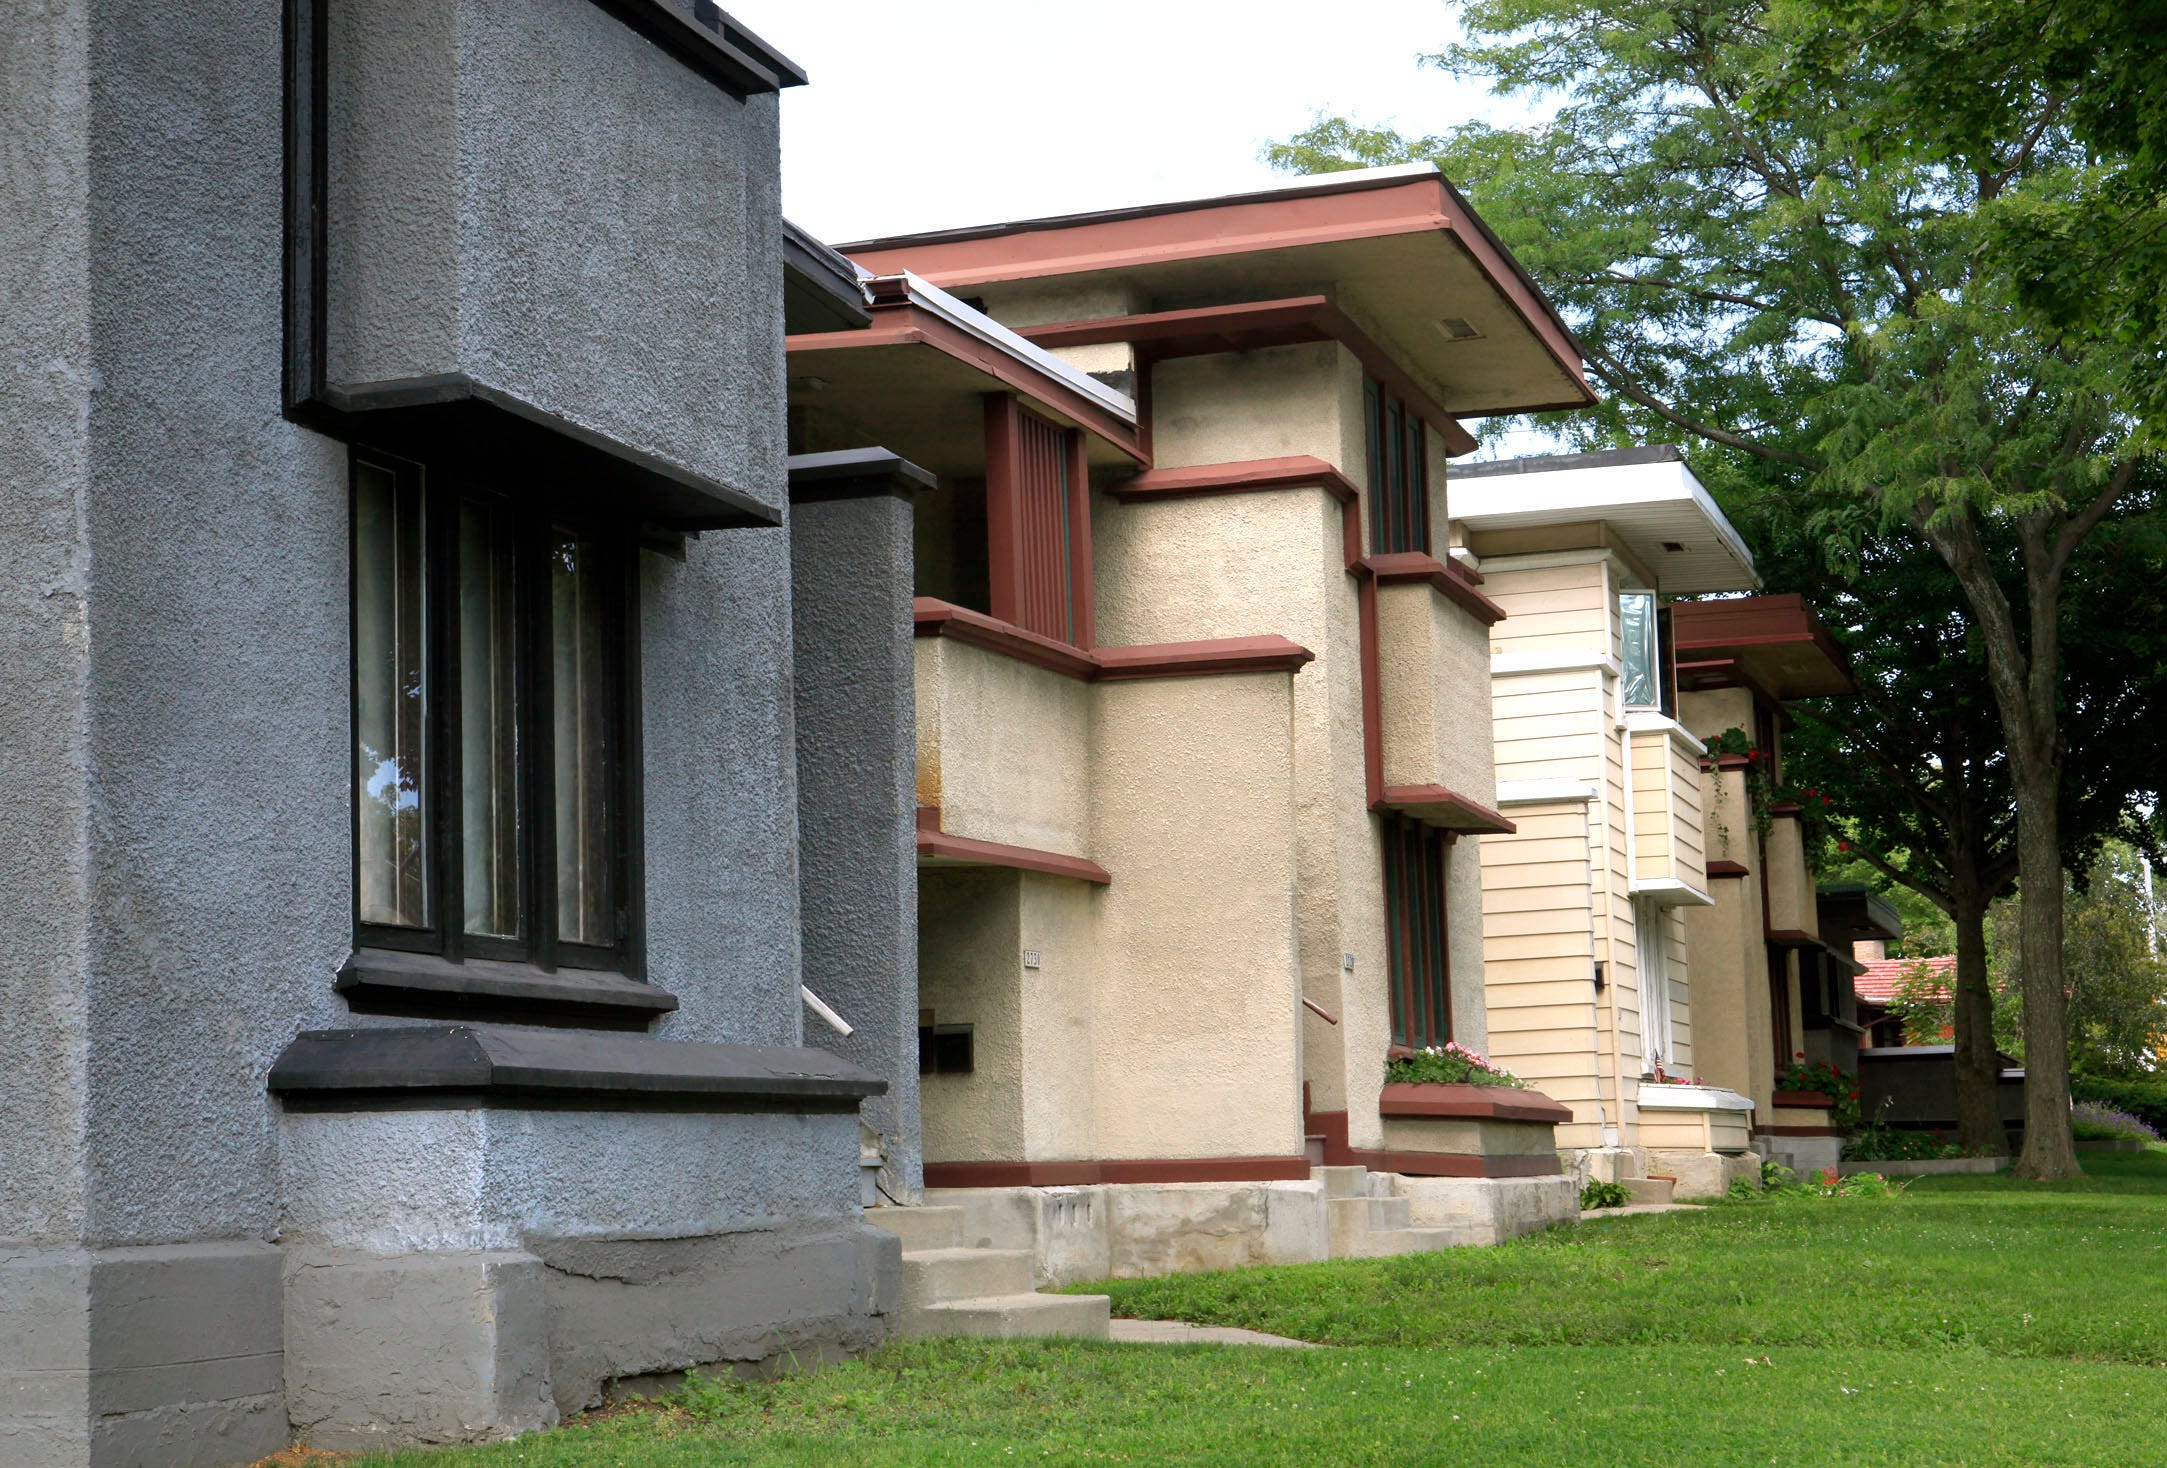 About Milwaukee's Burnham Block Frank Lloyd Wright houses